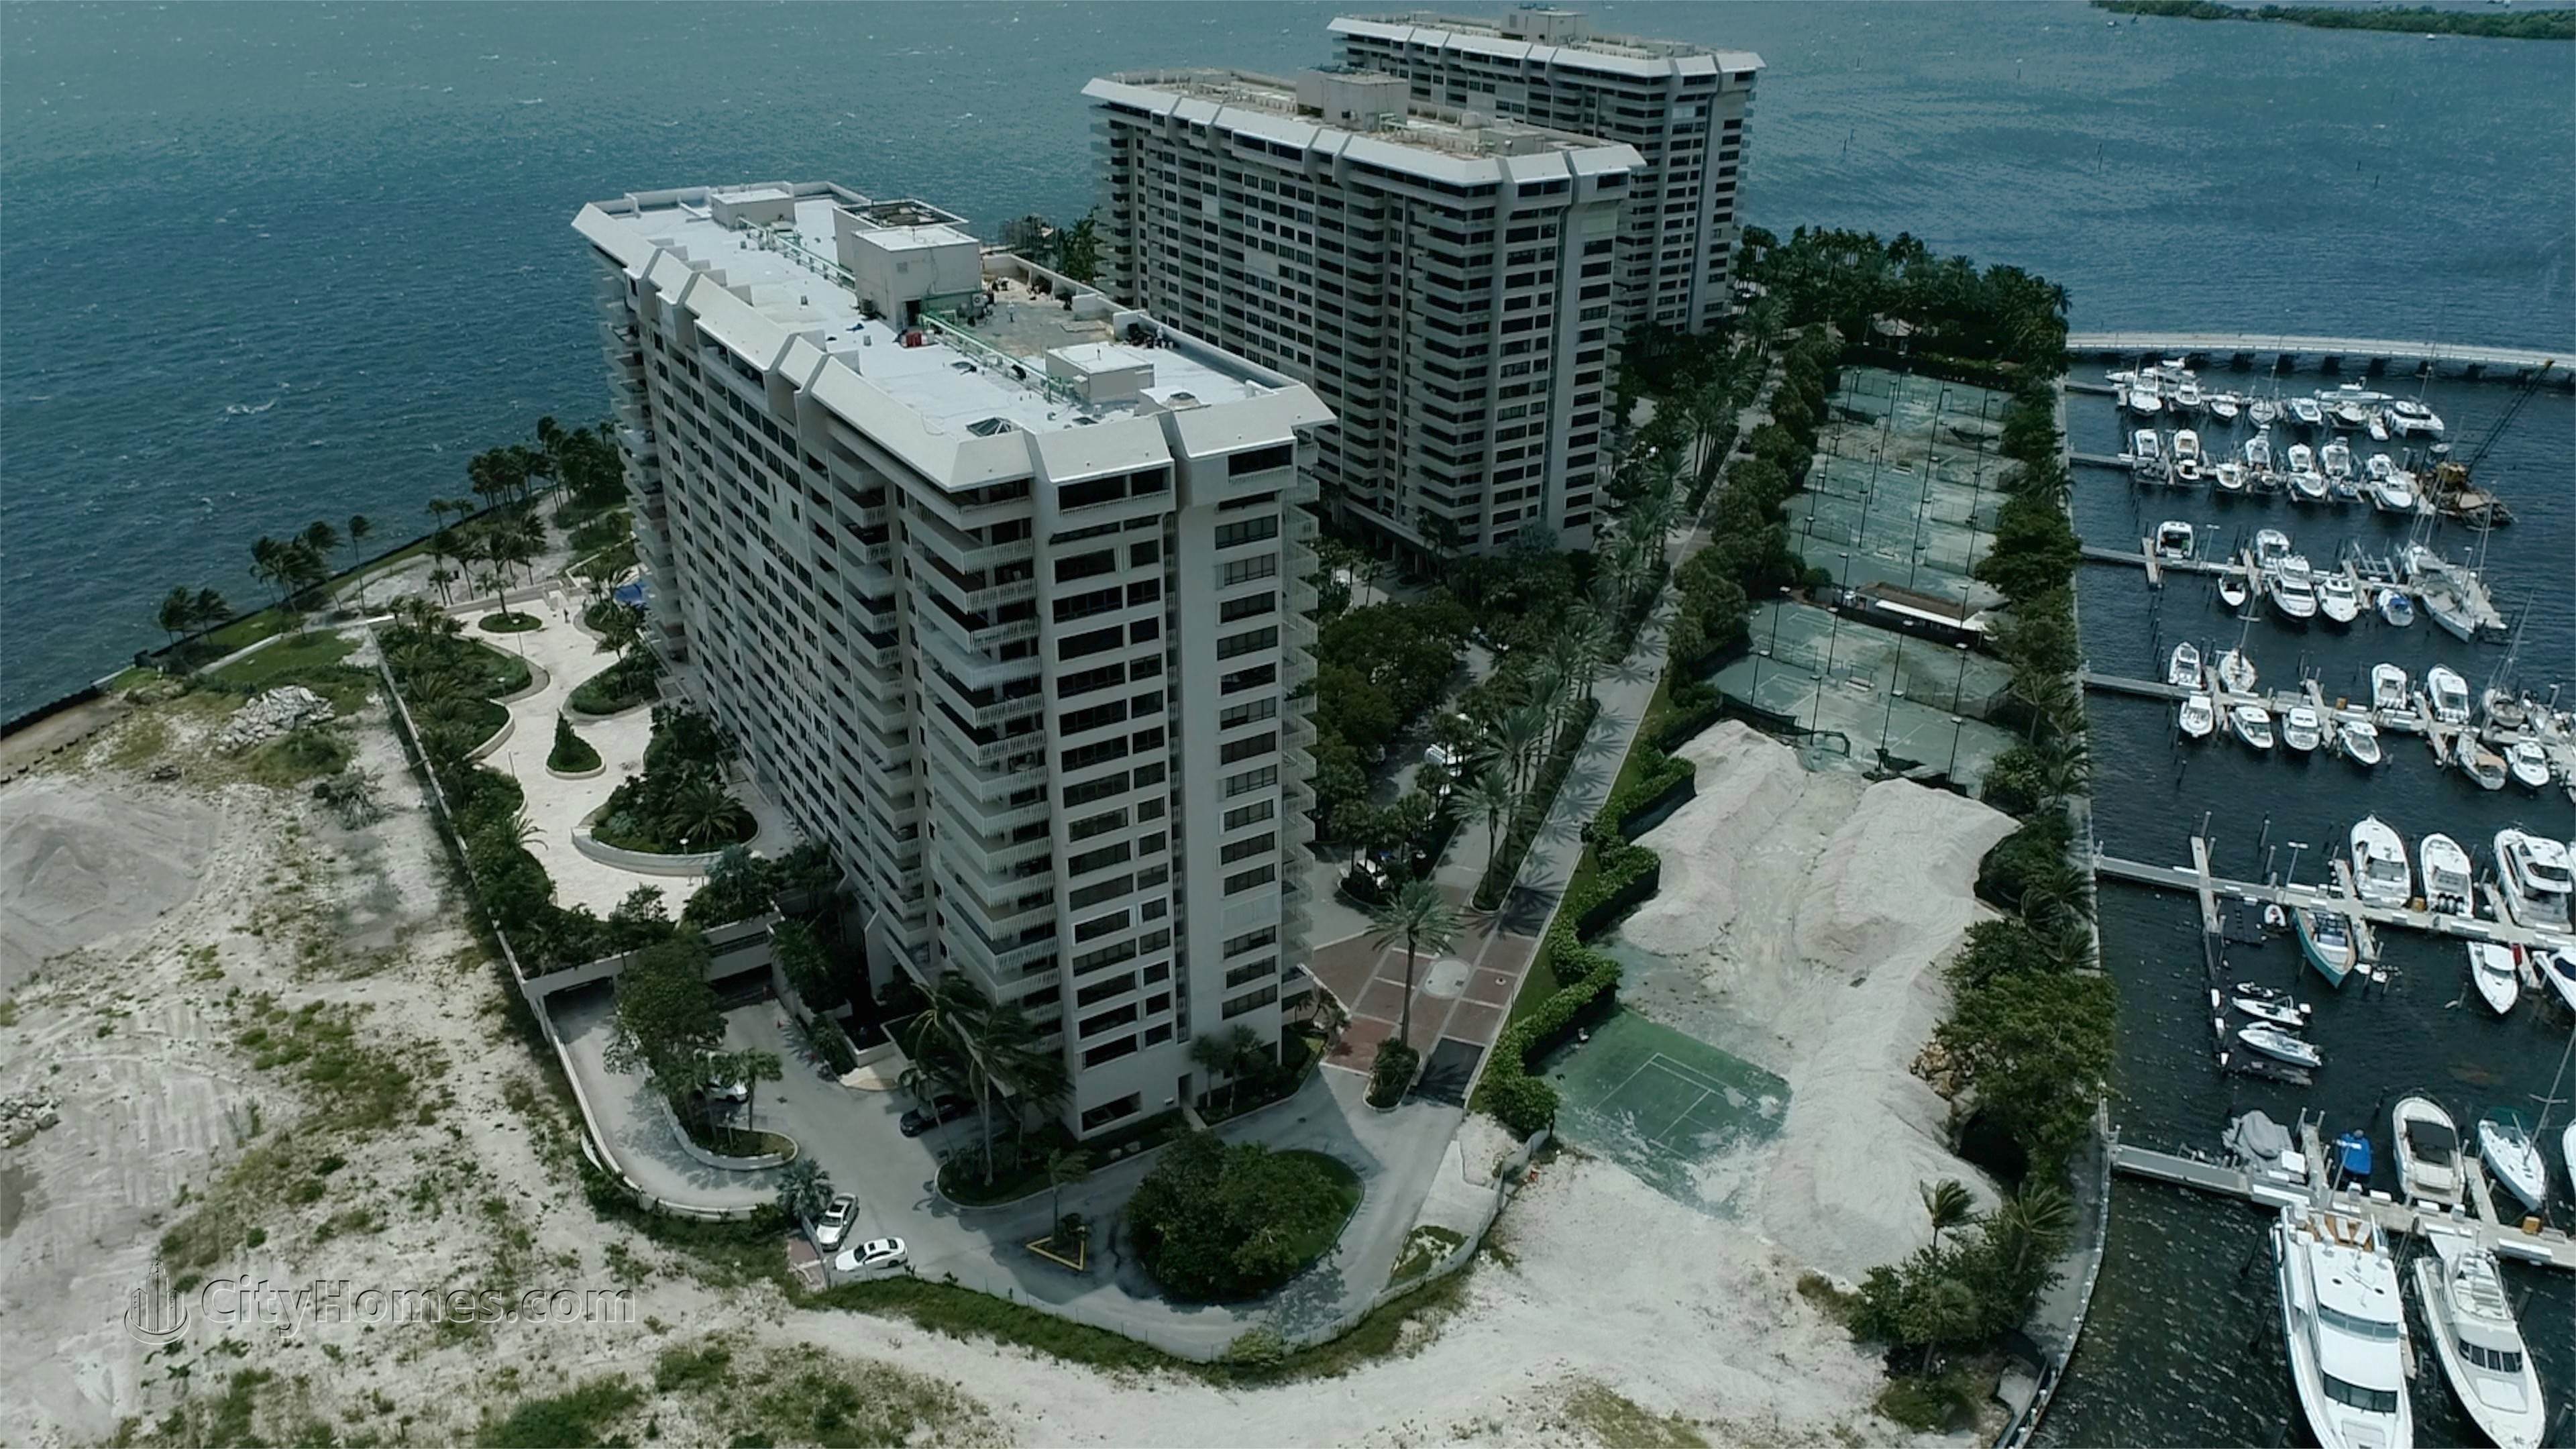 2. The Markers Grove Isle building at 4 Grove Isle Drive, Miami, FL 33133